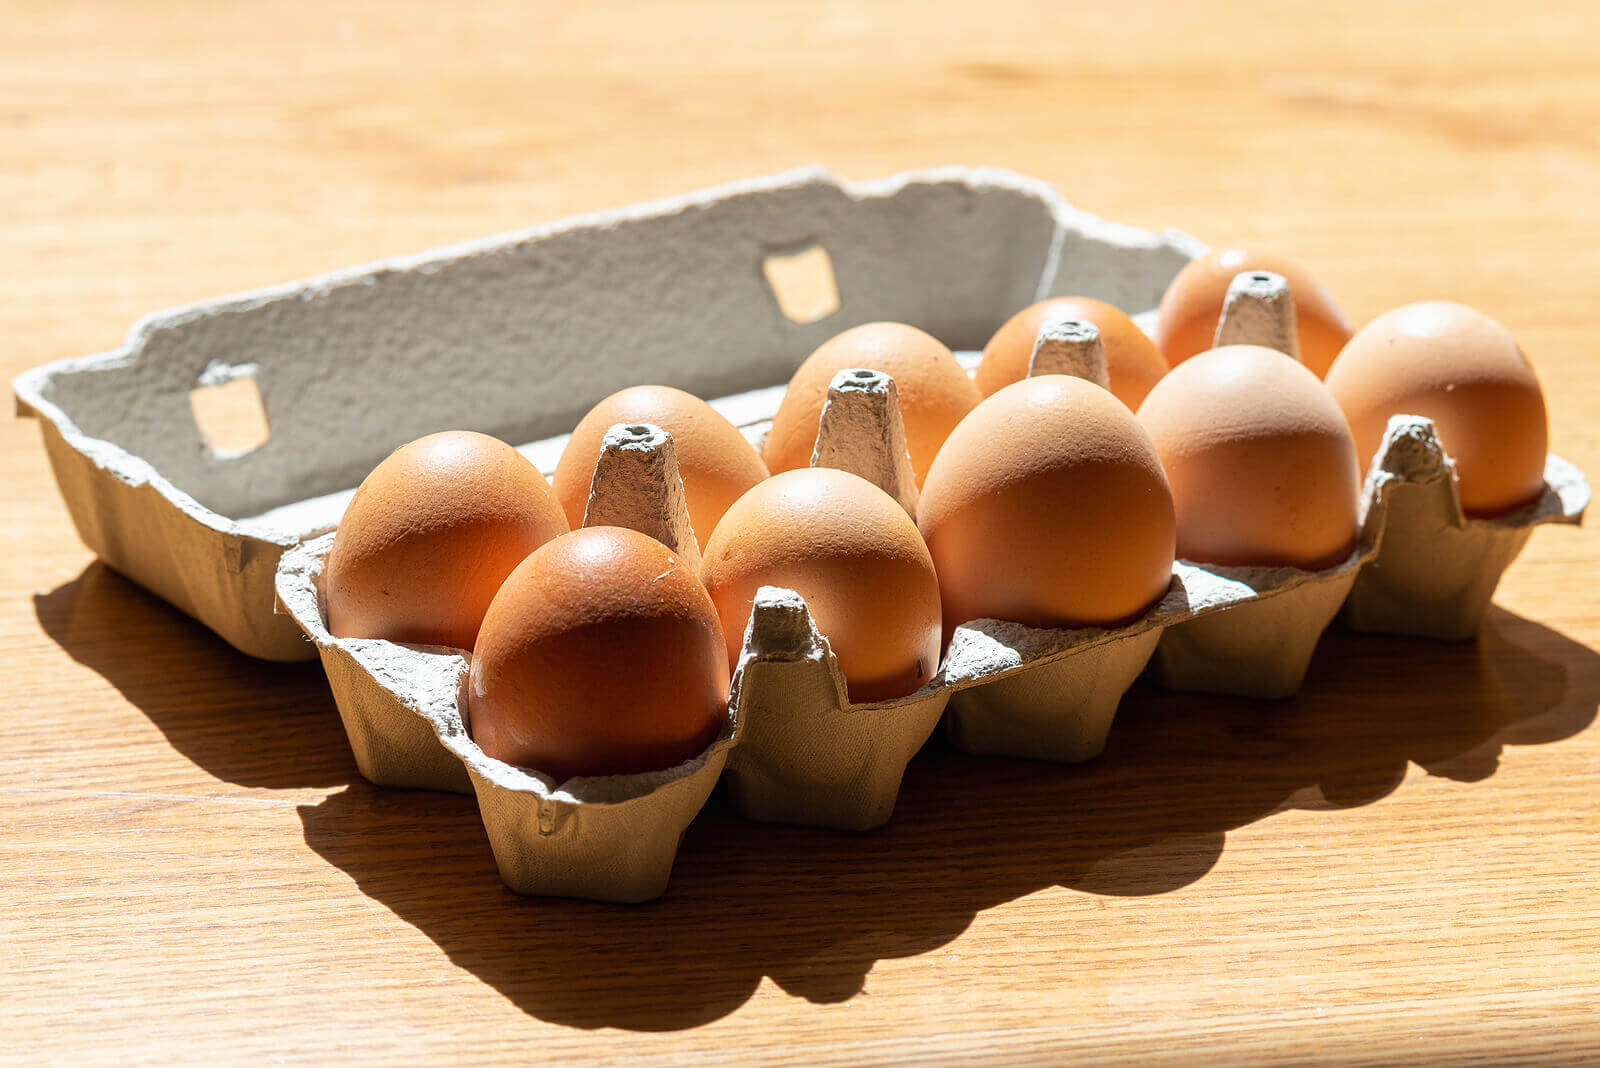 An egg carton containing 10 fresh chicken eggs, placed on a light-coloured table